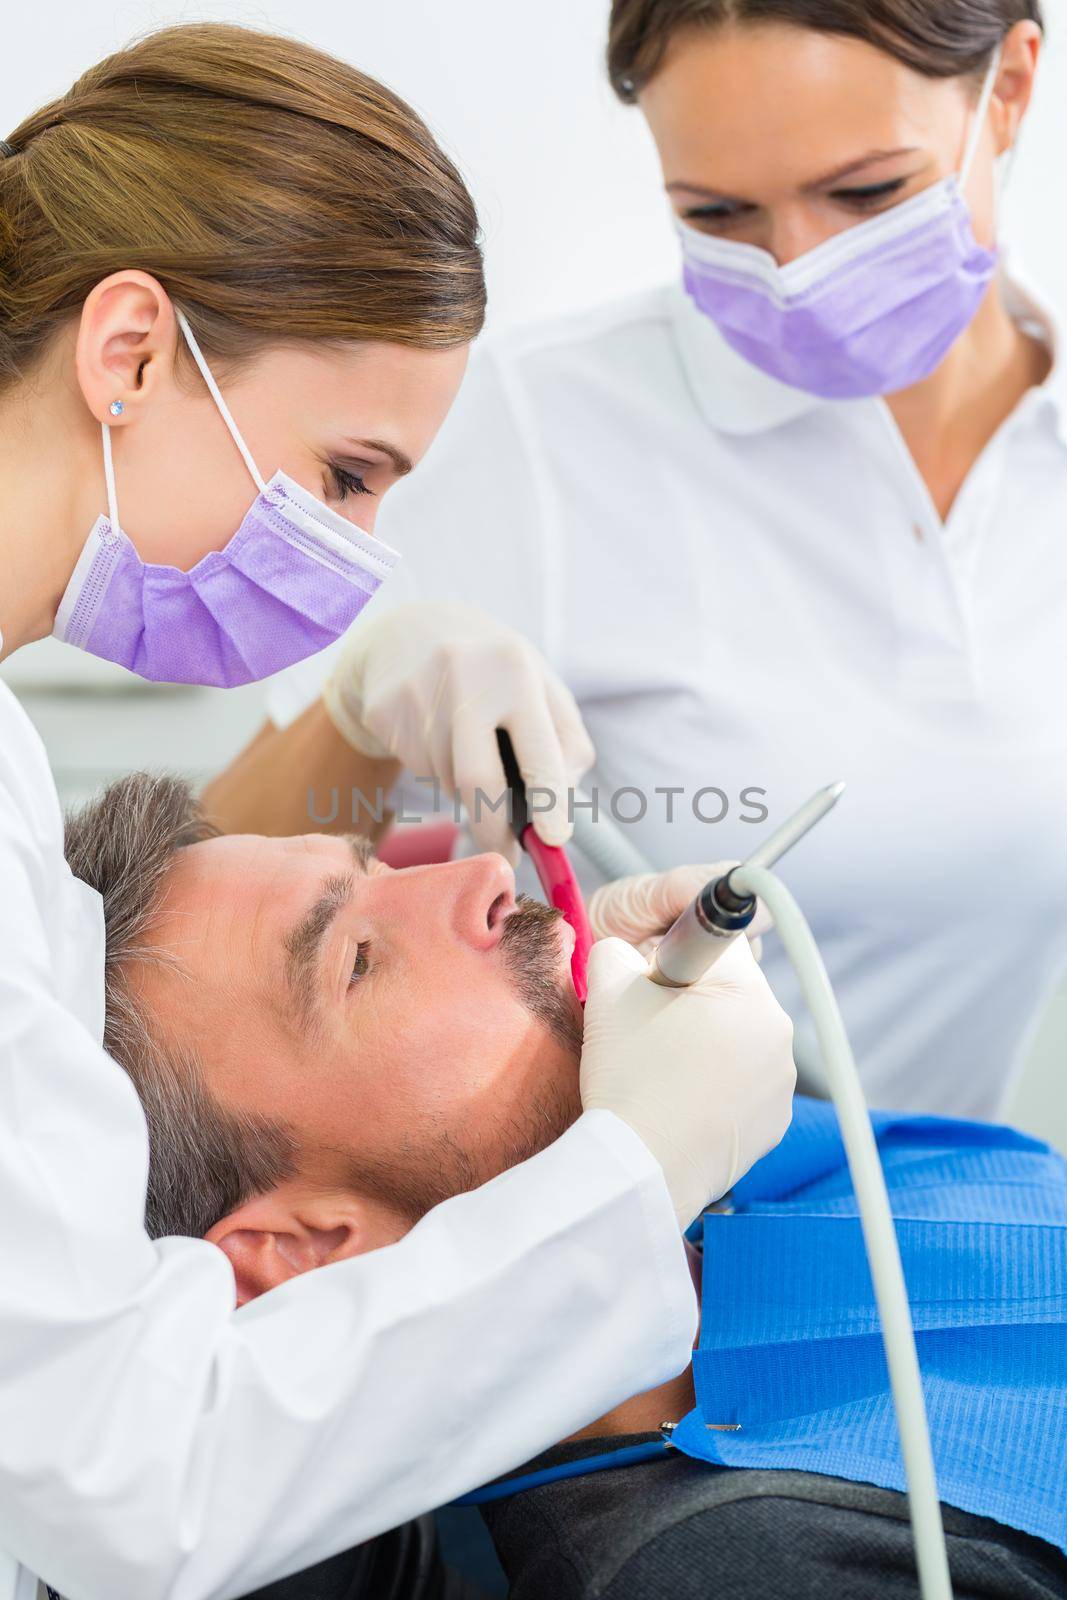 Patient with Dentist - dental treatment by Kzenon